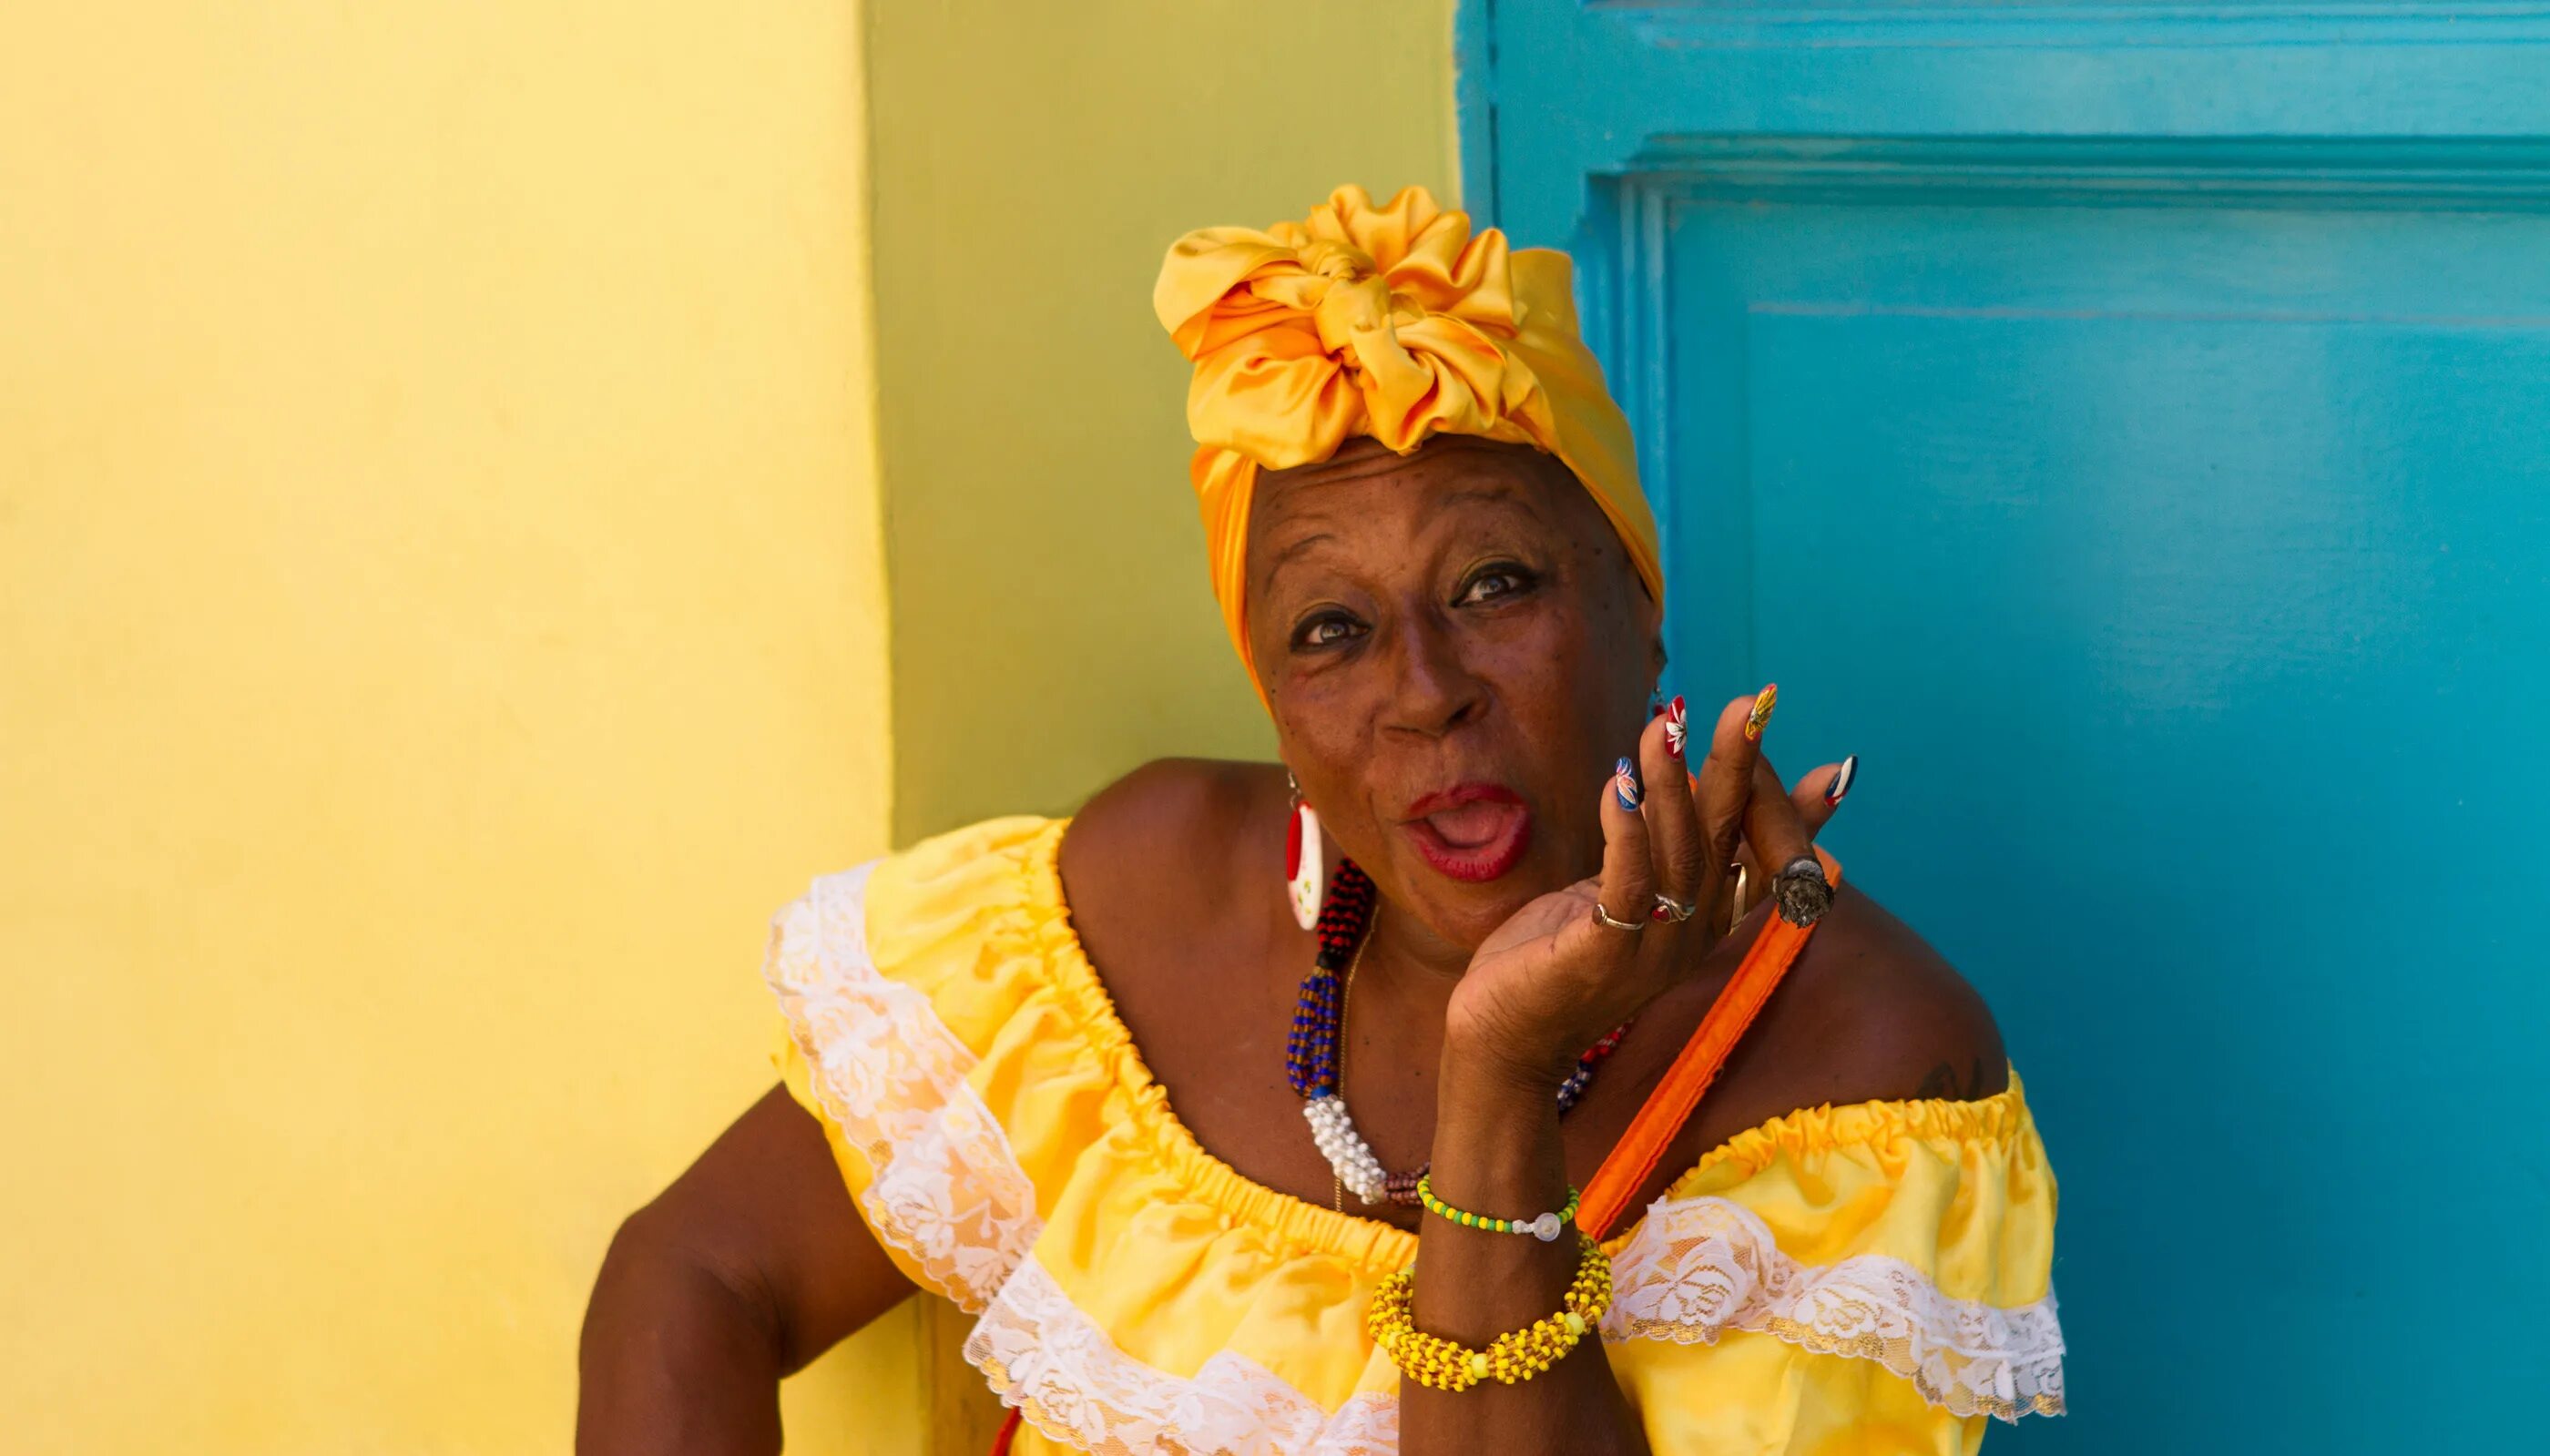 Кубинская вконтакте. Кубинские женщины. Бабушки Кубы. Куба бабушка с сигарой. Куба женщина с сигарой.